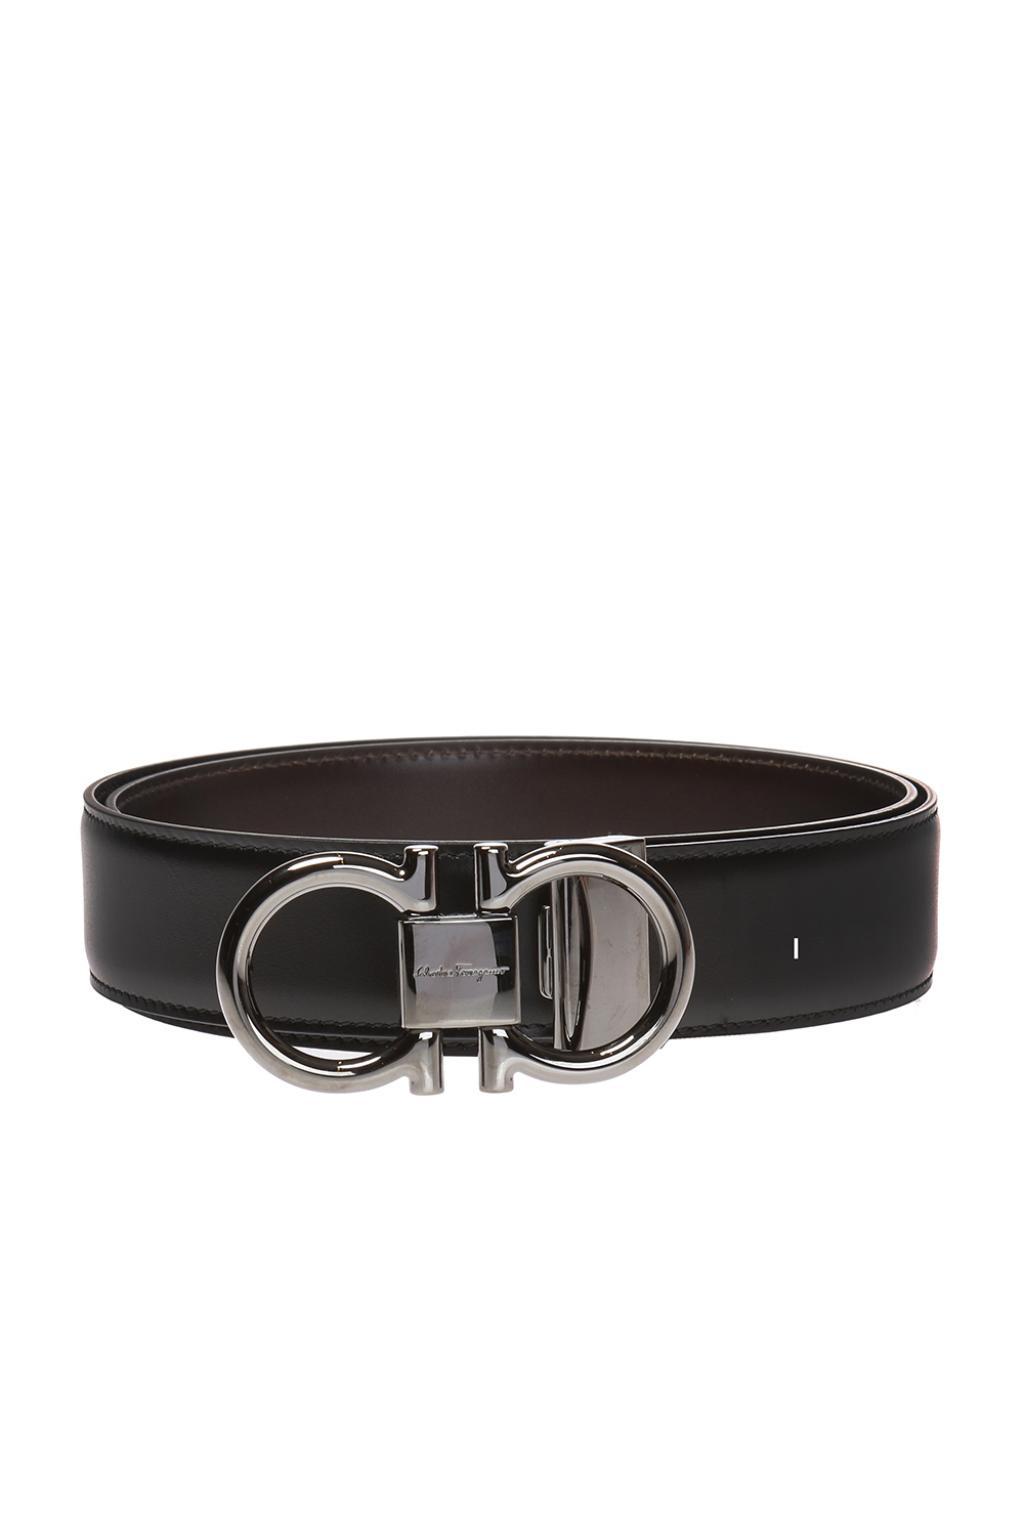 Ferragamo Leather Reversible Belt in Black for Men - Lyst